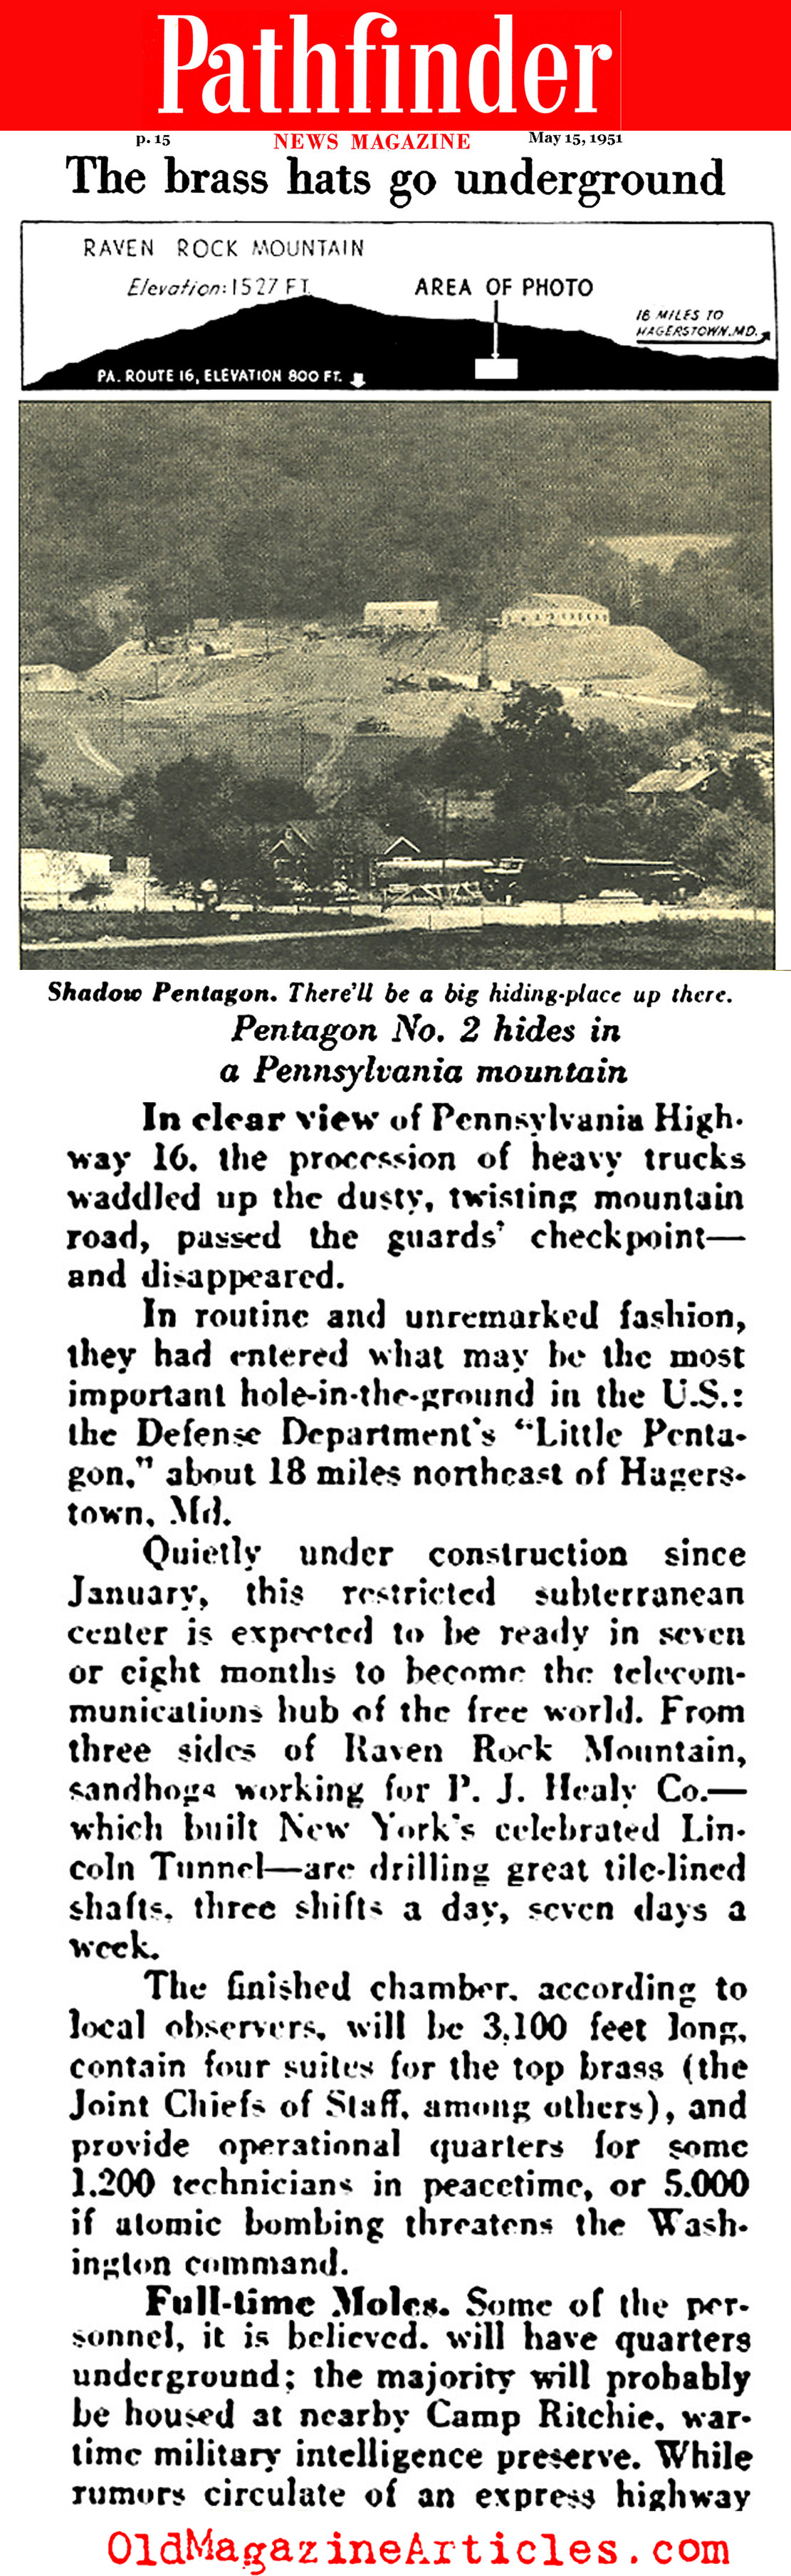 The Pentagon Prepared for W.W. III (Pathfinder Magazine, 1951)